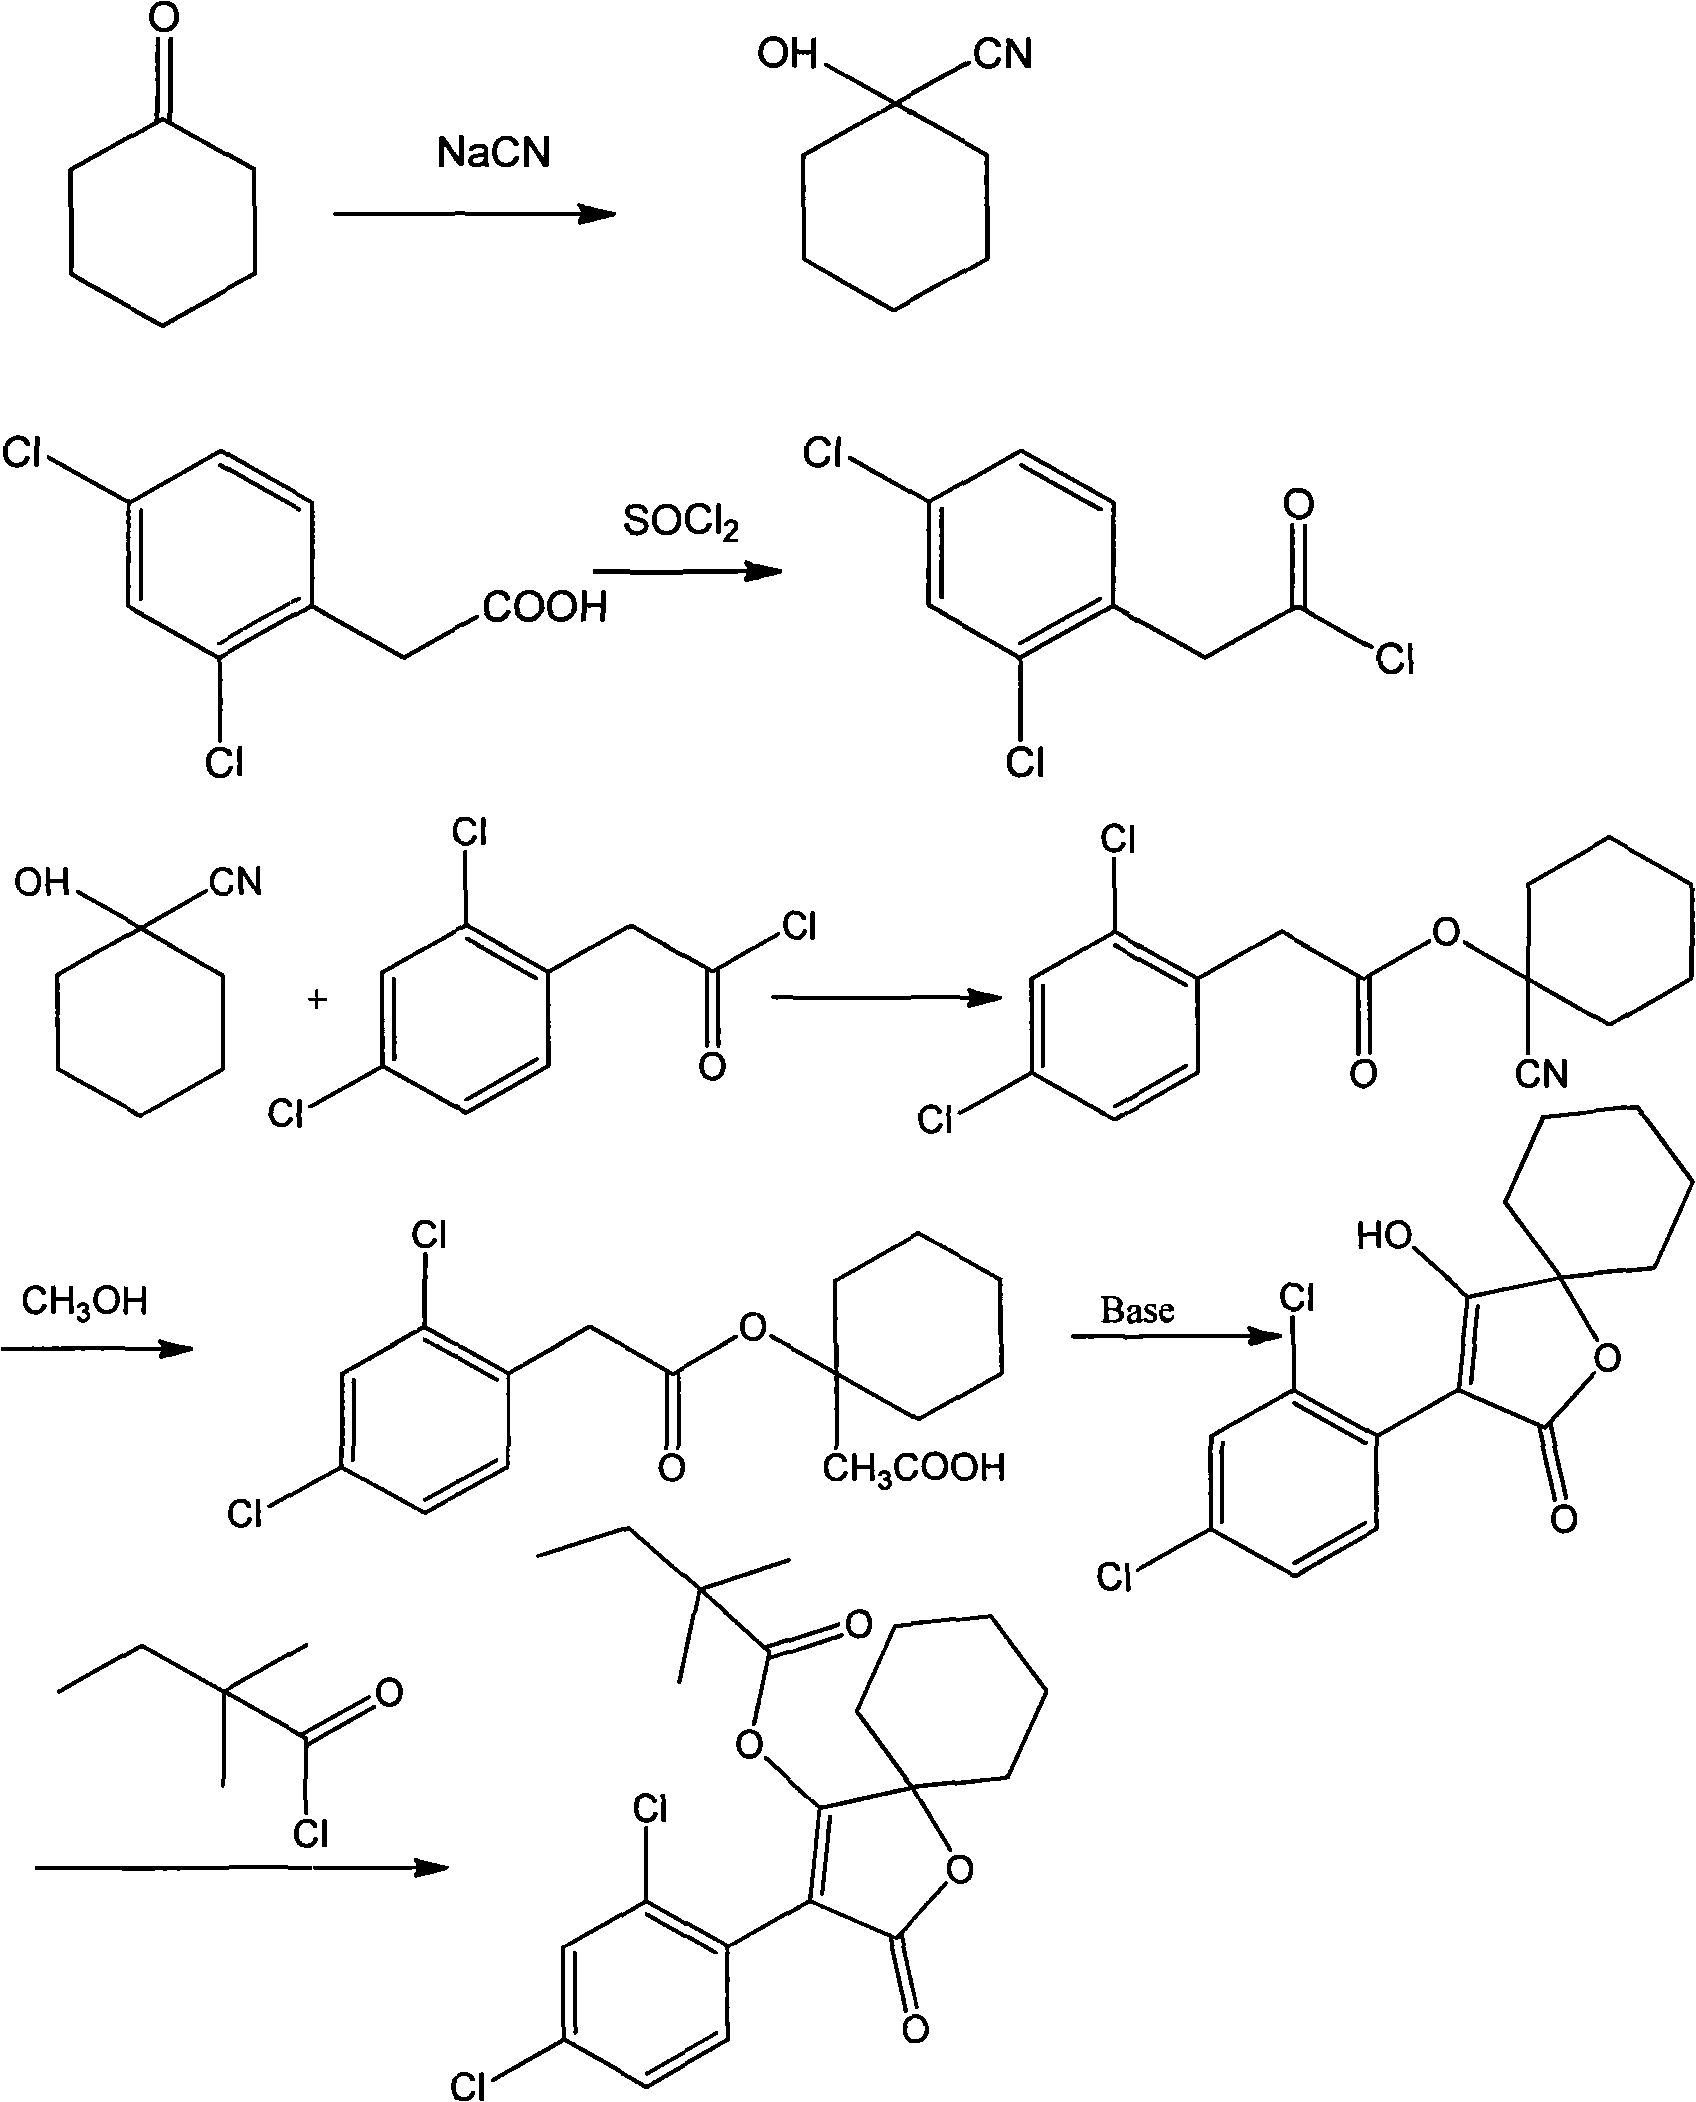 Production method for spirodiclofen